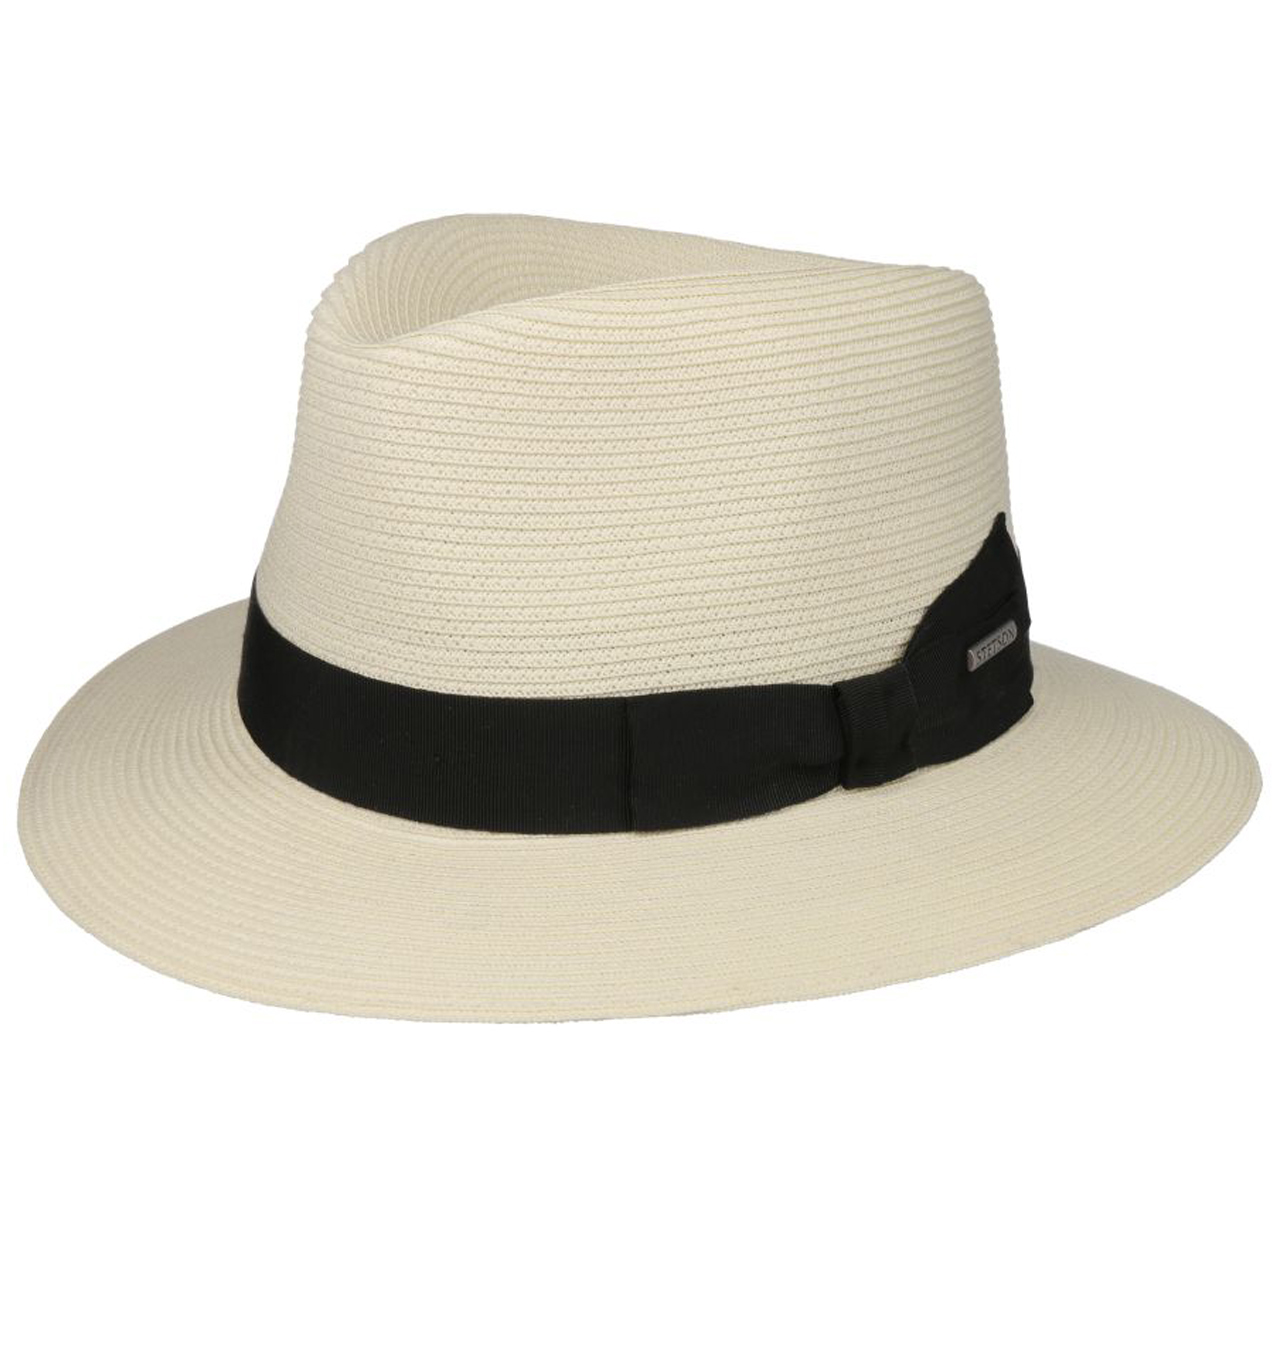 Stetson - Ventaco Traveller Straw Hat - Cream White